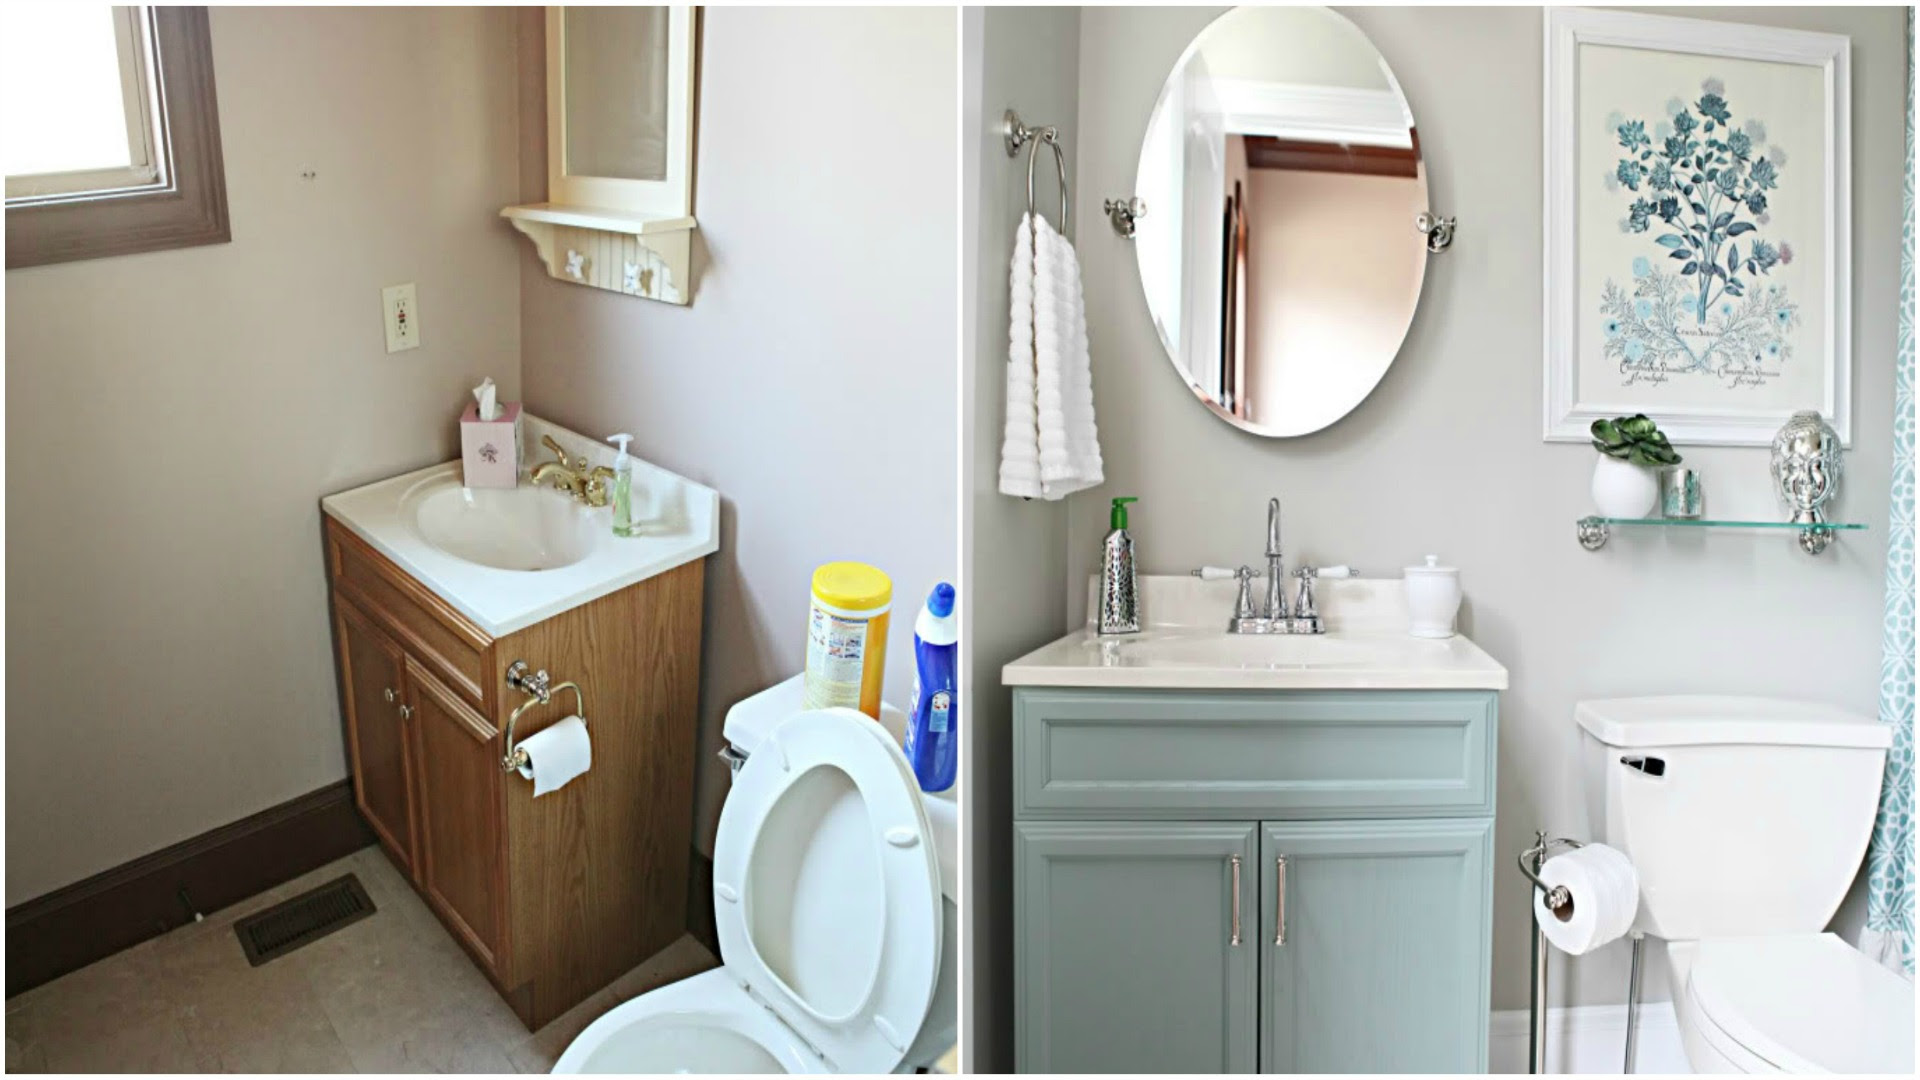 30+ Inexpensive Bathroom Renovation Ideas - Interior ...